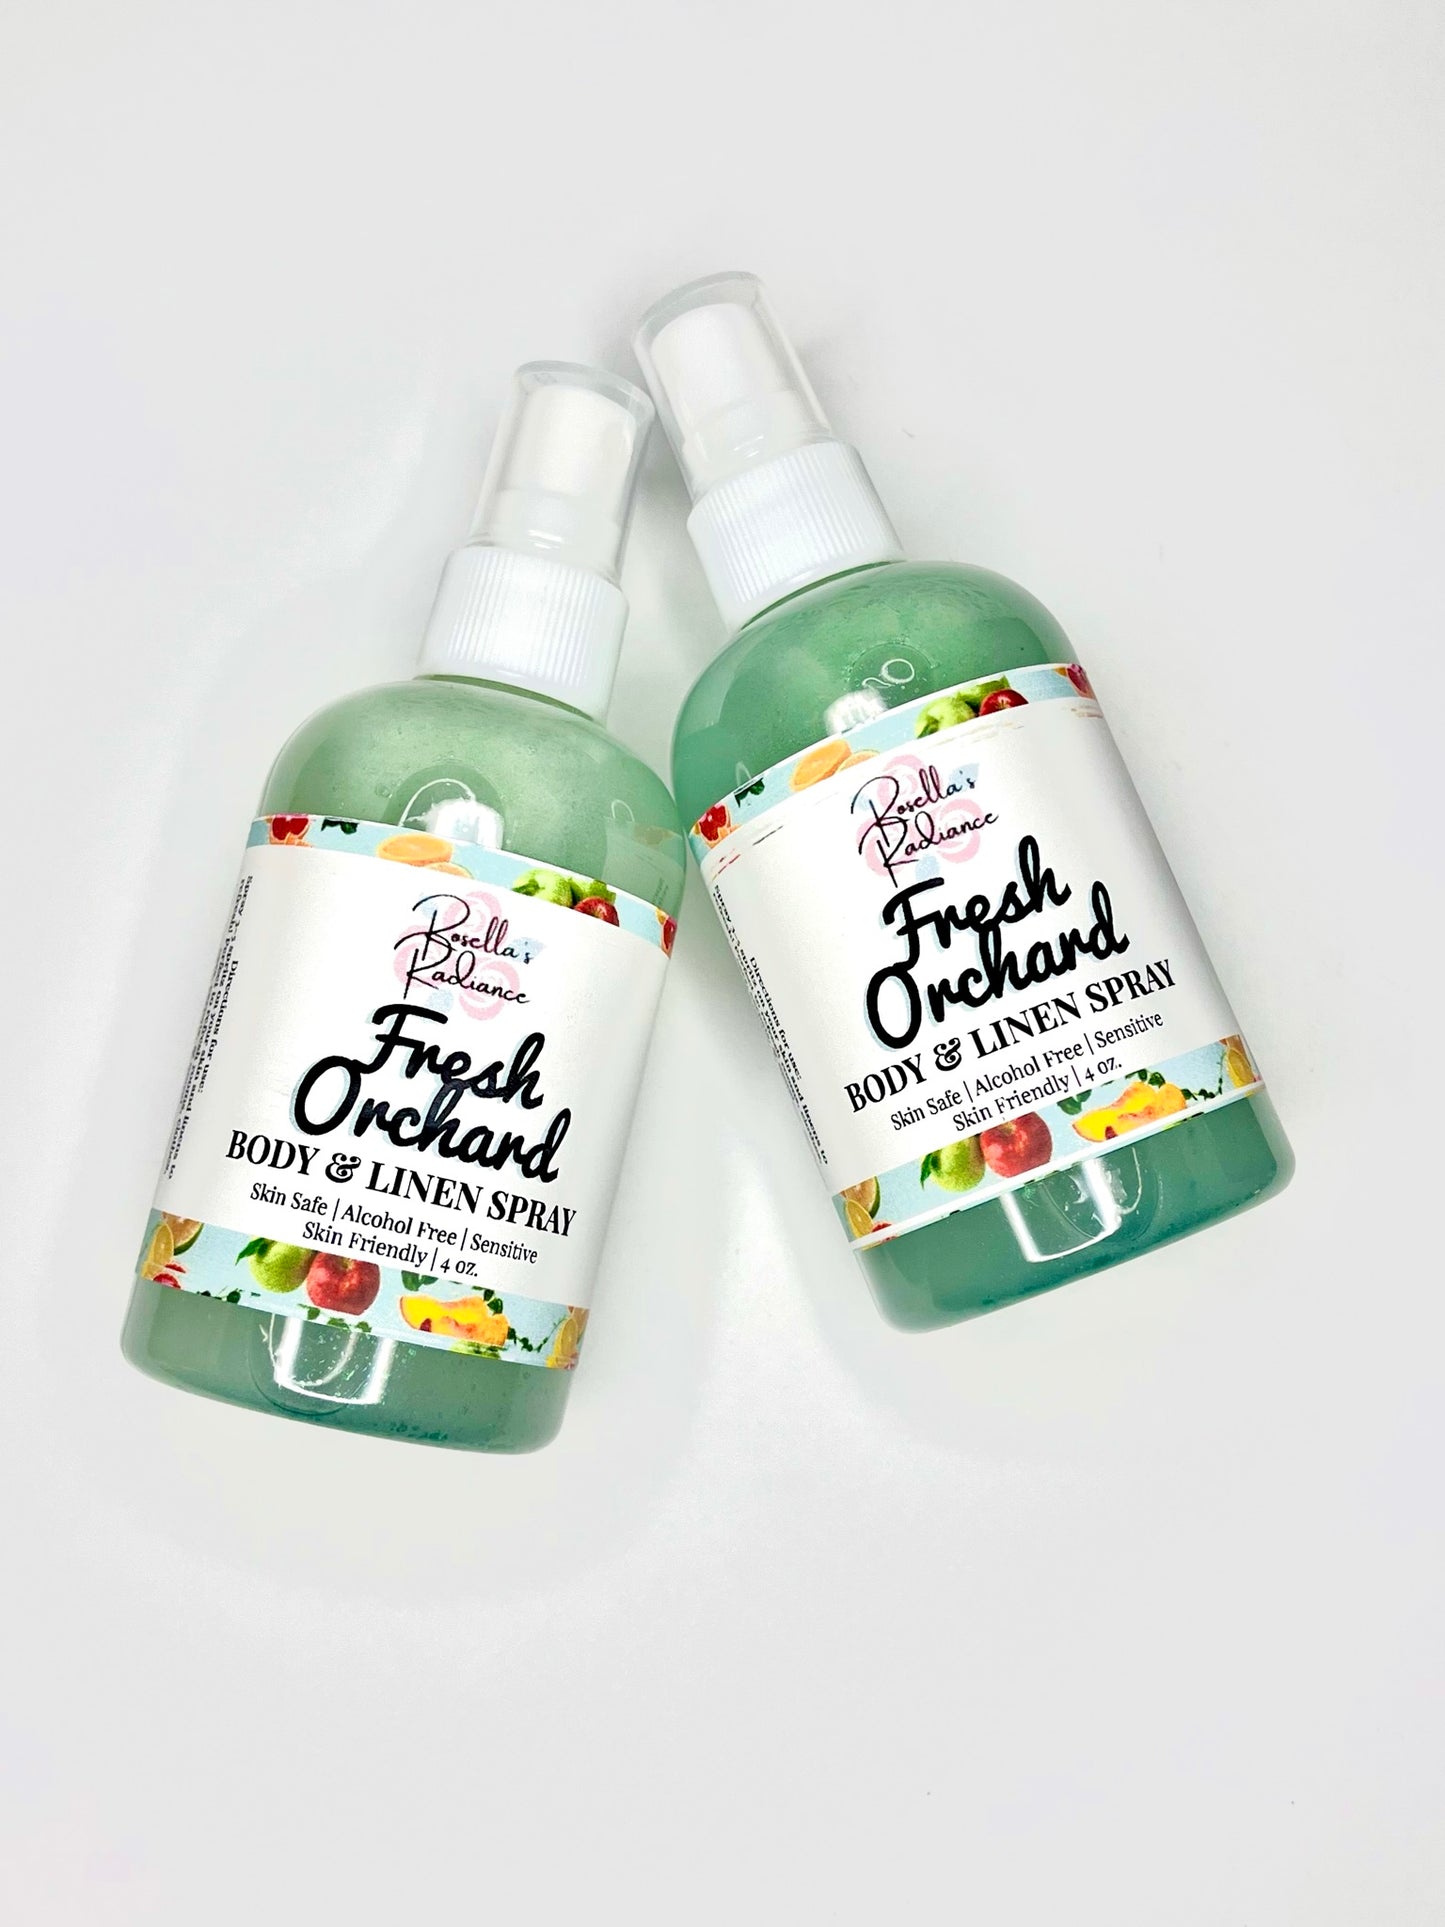 Fresh Orchard Body & Linen Spray